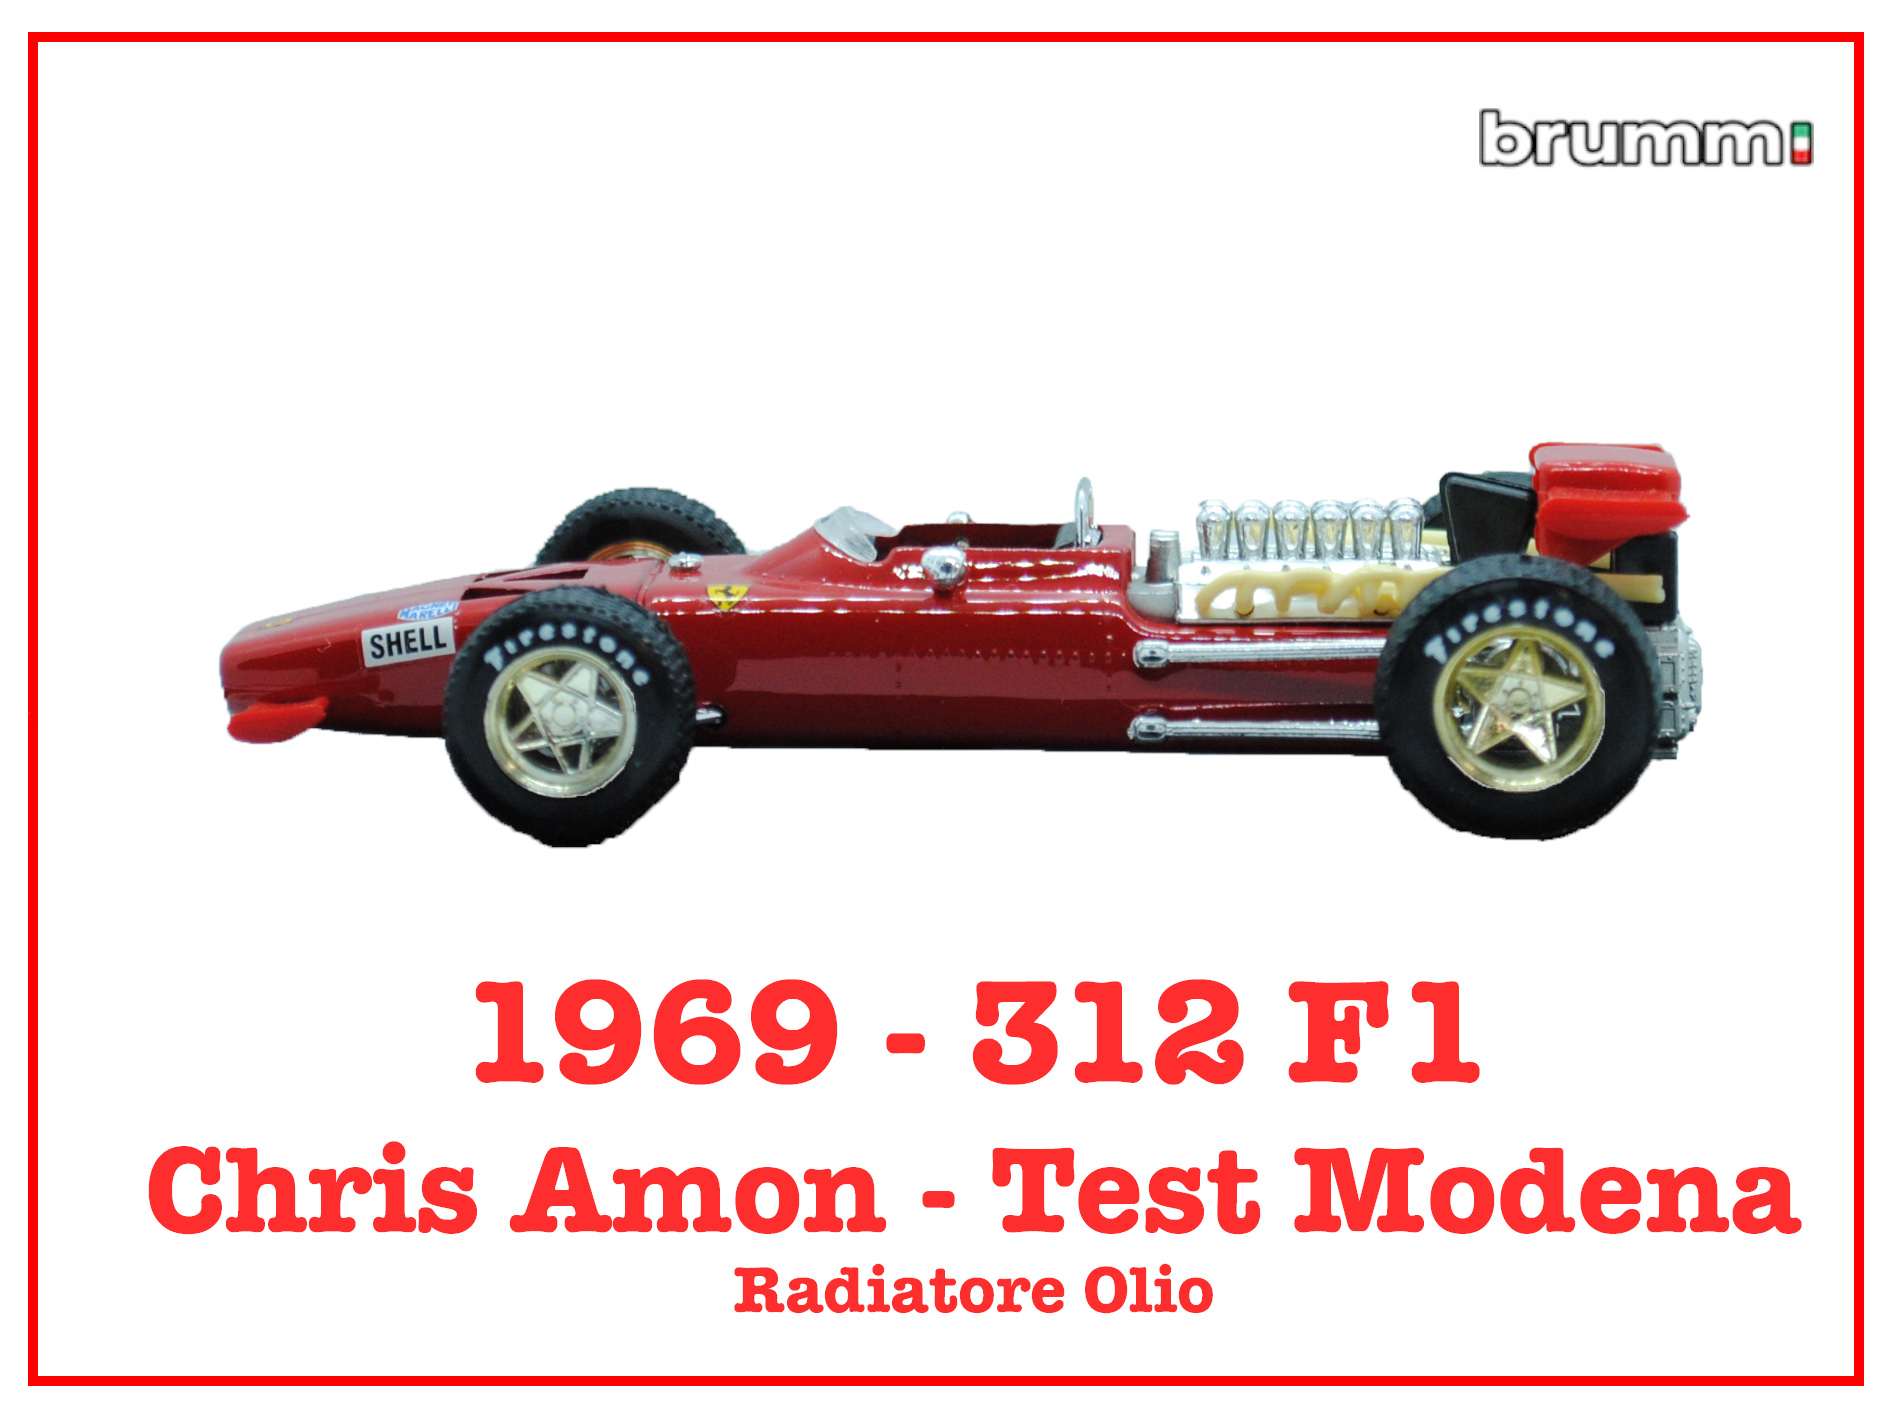 Immagine 312 F1 Chris Amon Test Modena Radiatore Olio